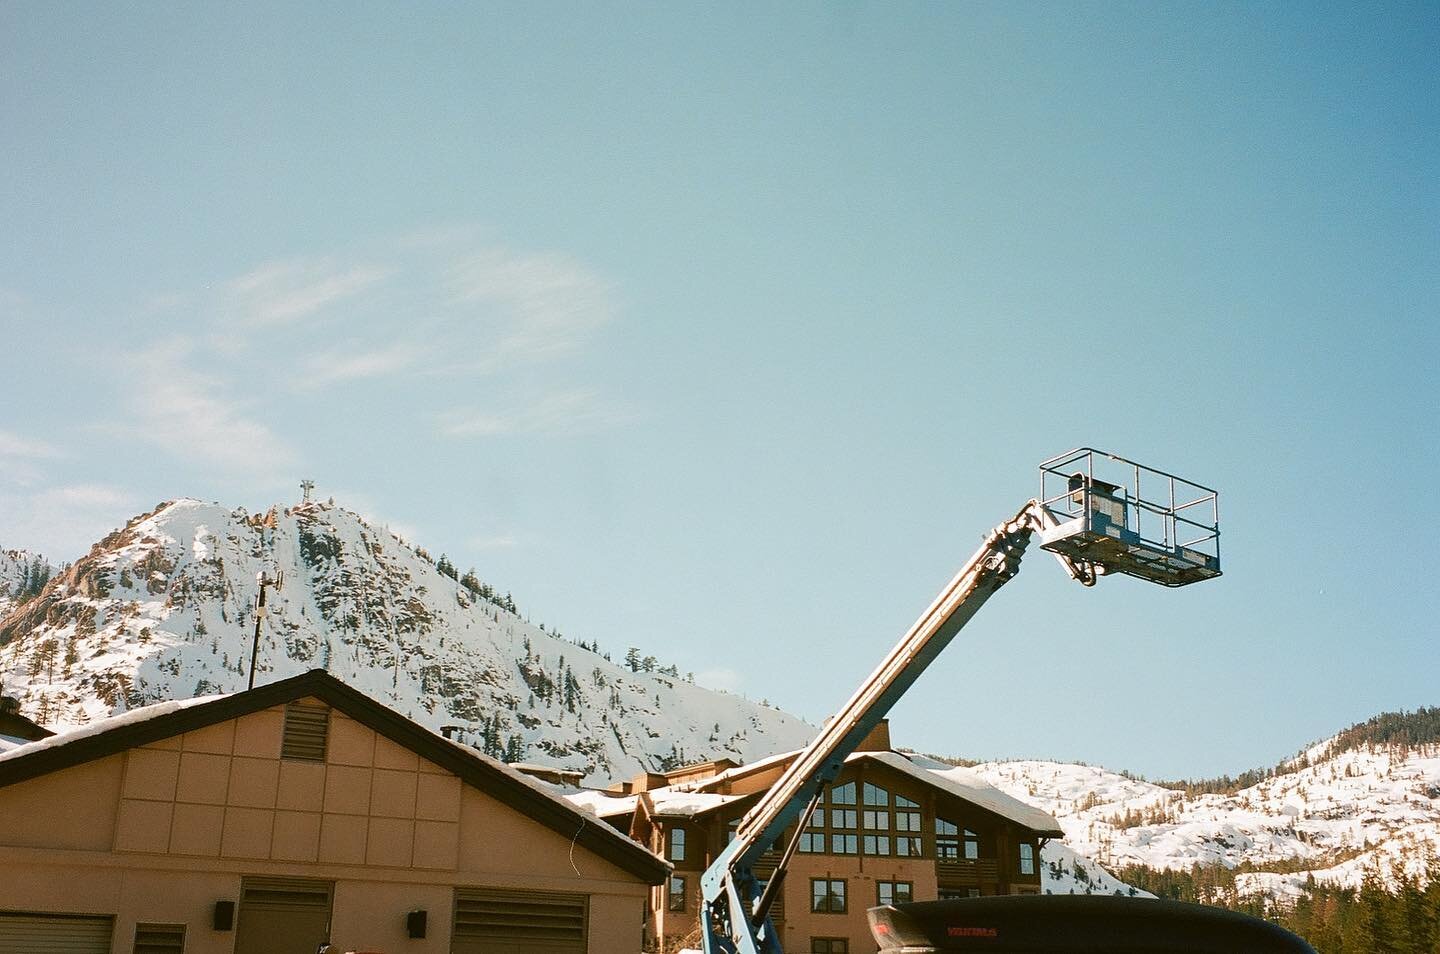 ski season!

🎿

#kodakfilm #35mm #palisadestahoe #bluebirdday #ski